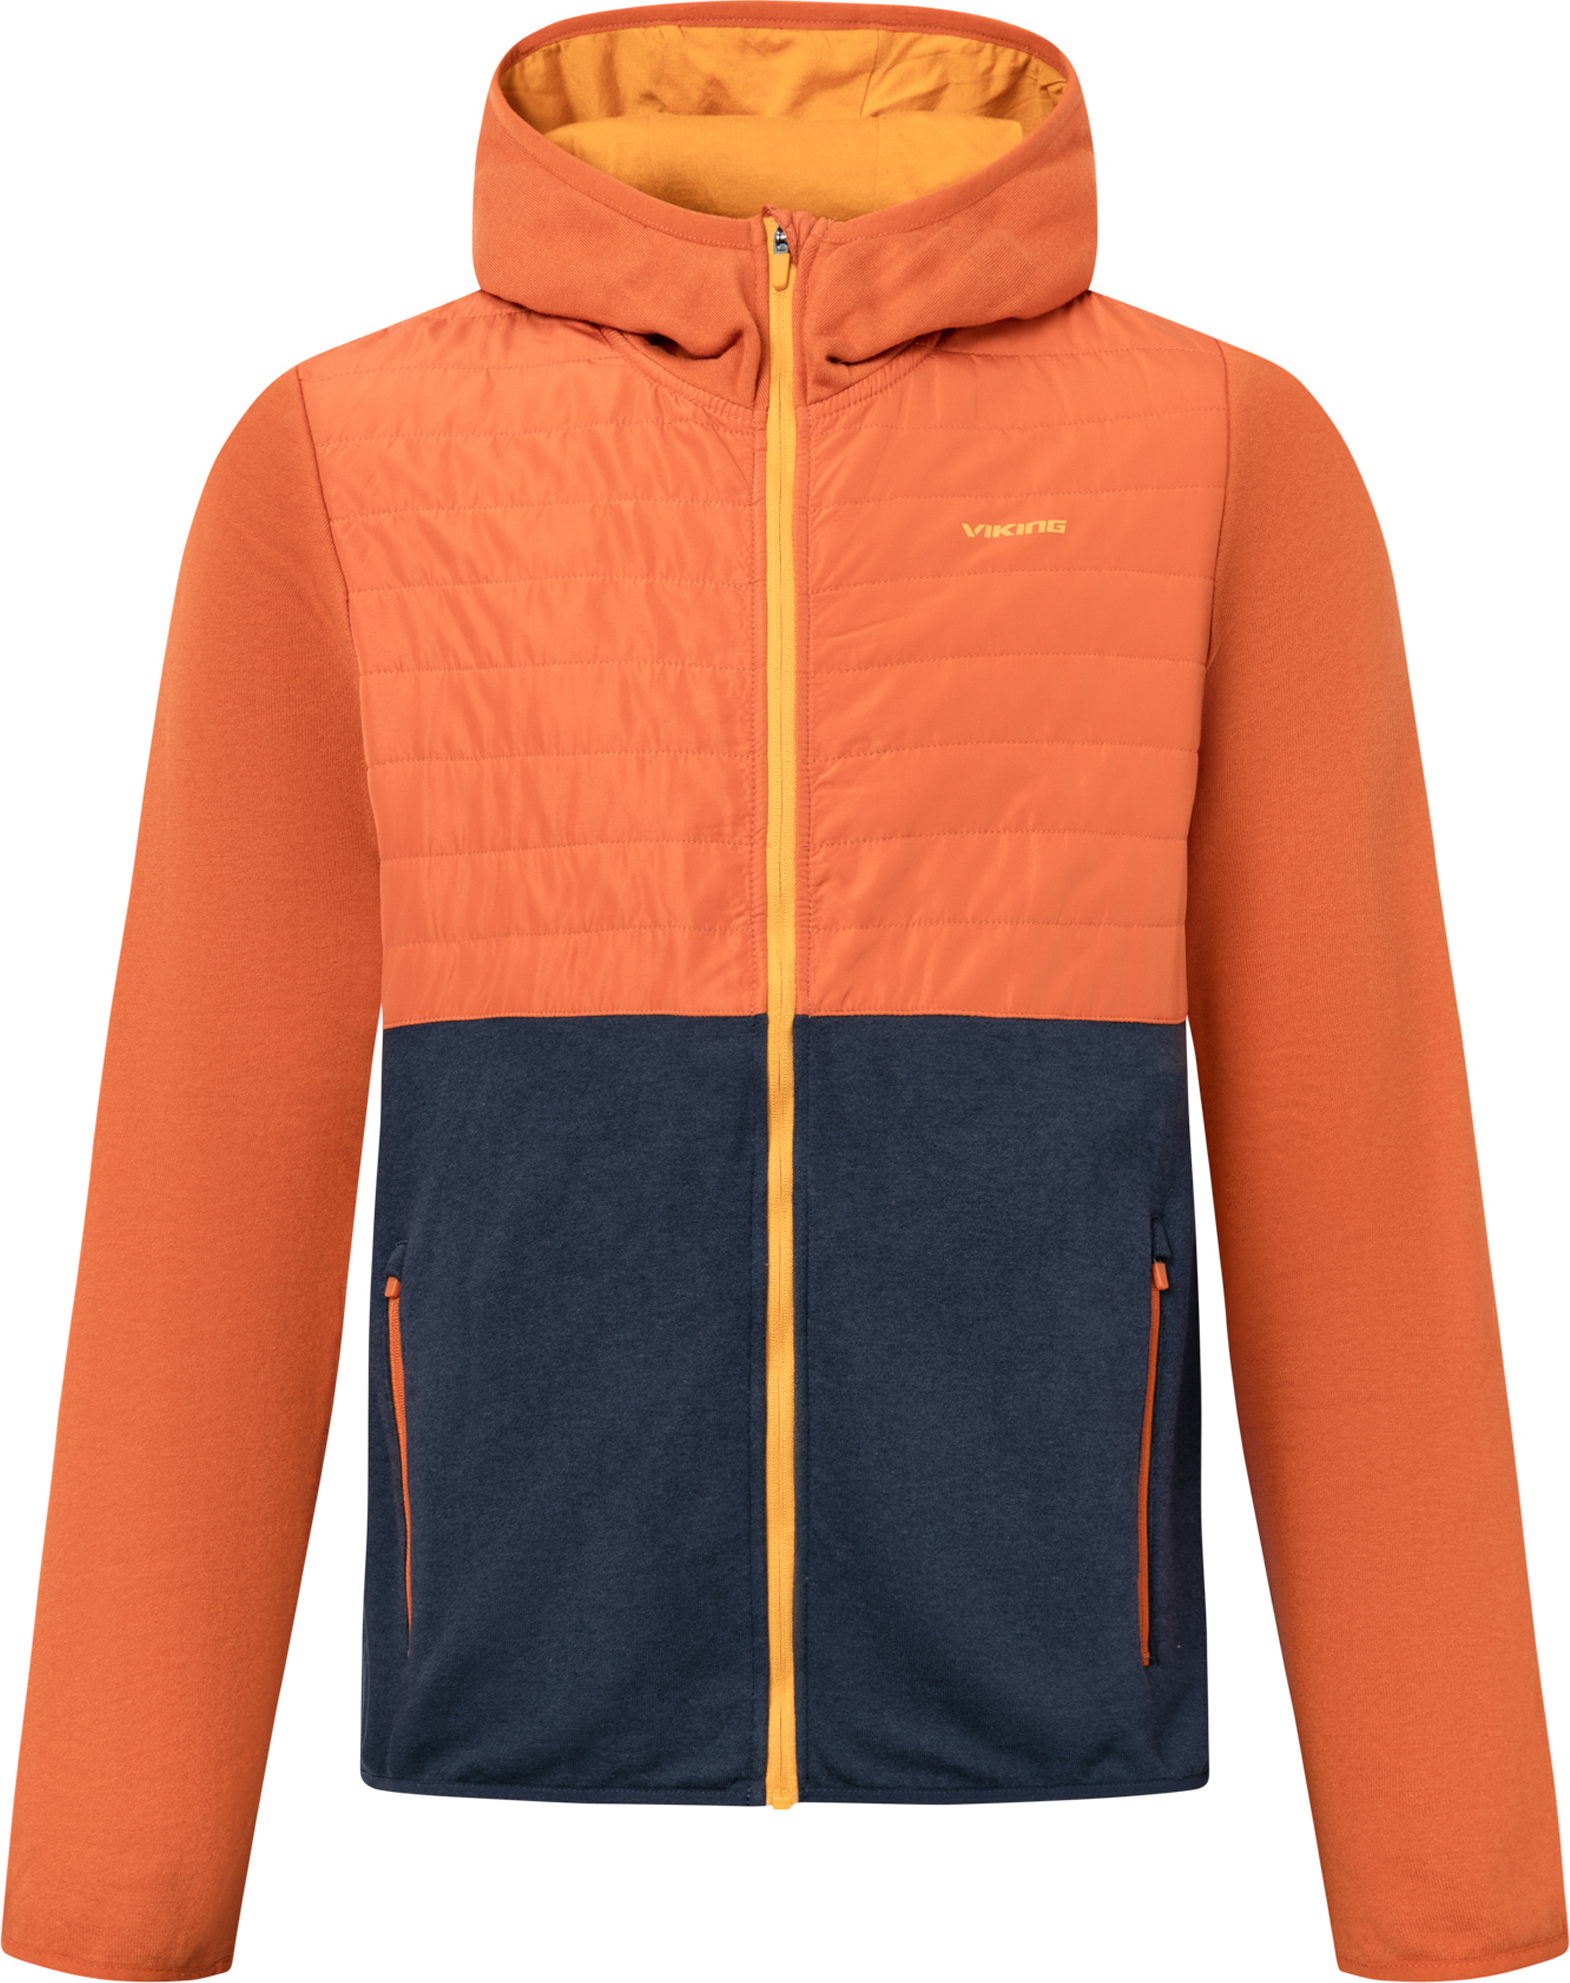 Pánská outdoorová bunda VIKING Creek Hoodie oranžovomodrá Velikost: L